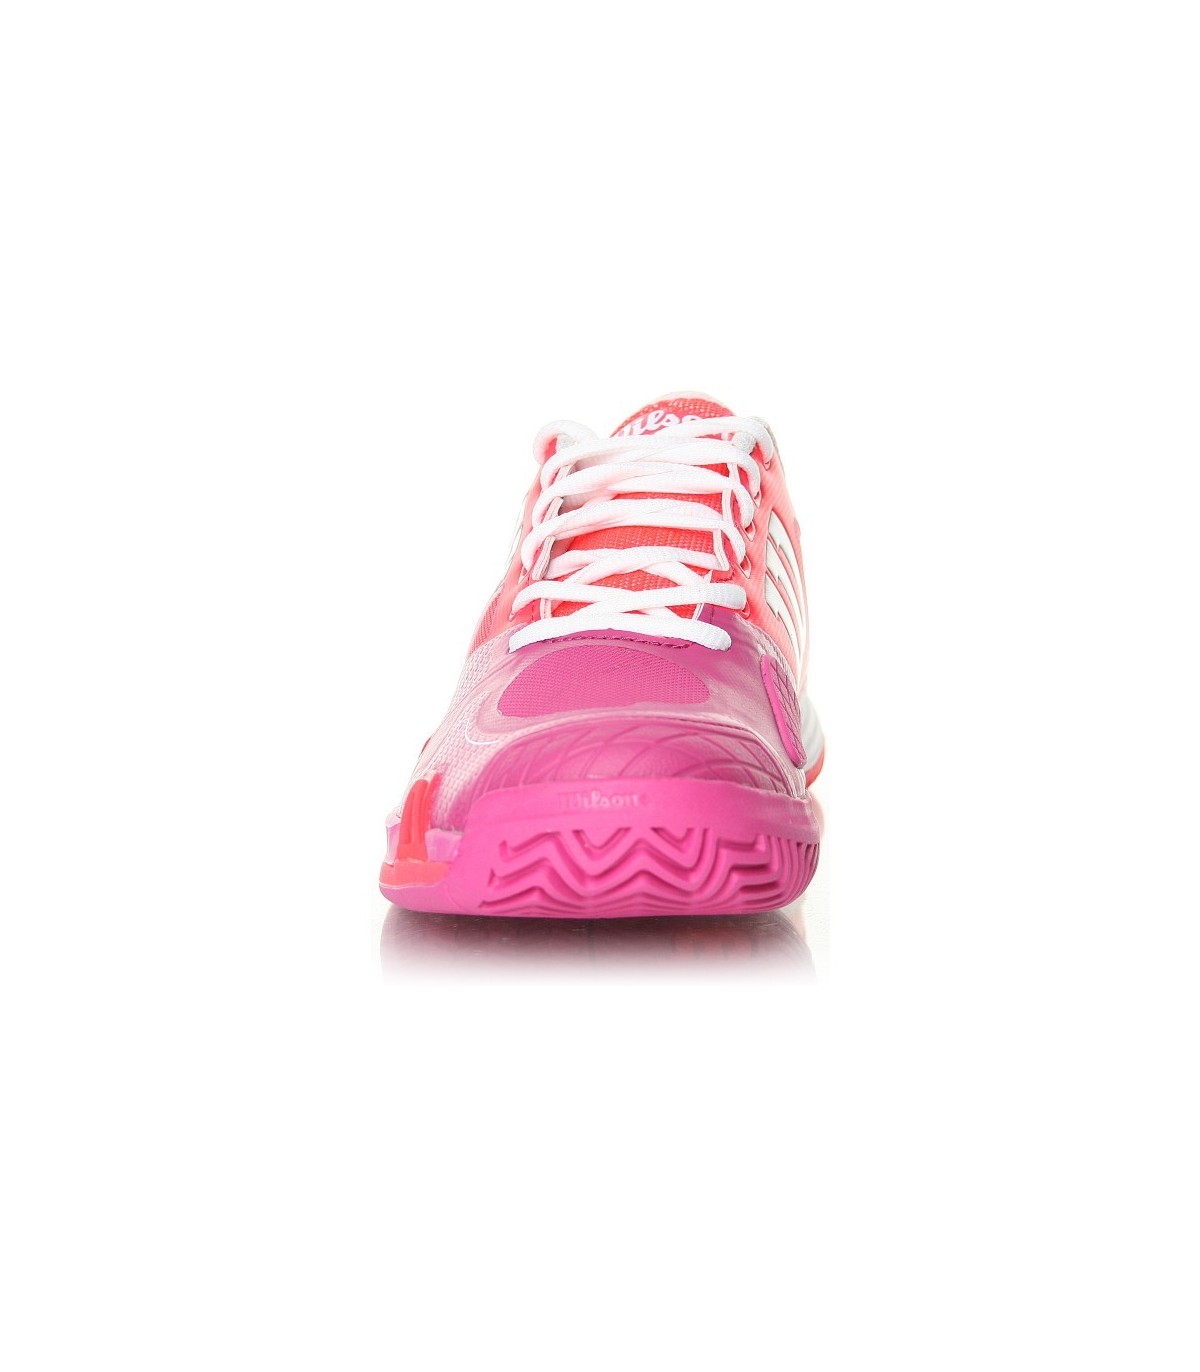 کفش ورزشی زنانه مخصوص تنیس ویلسون مدل Wilson Women Tennis Shoes Neon Red/Fiesta Pink/White 